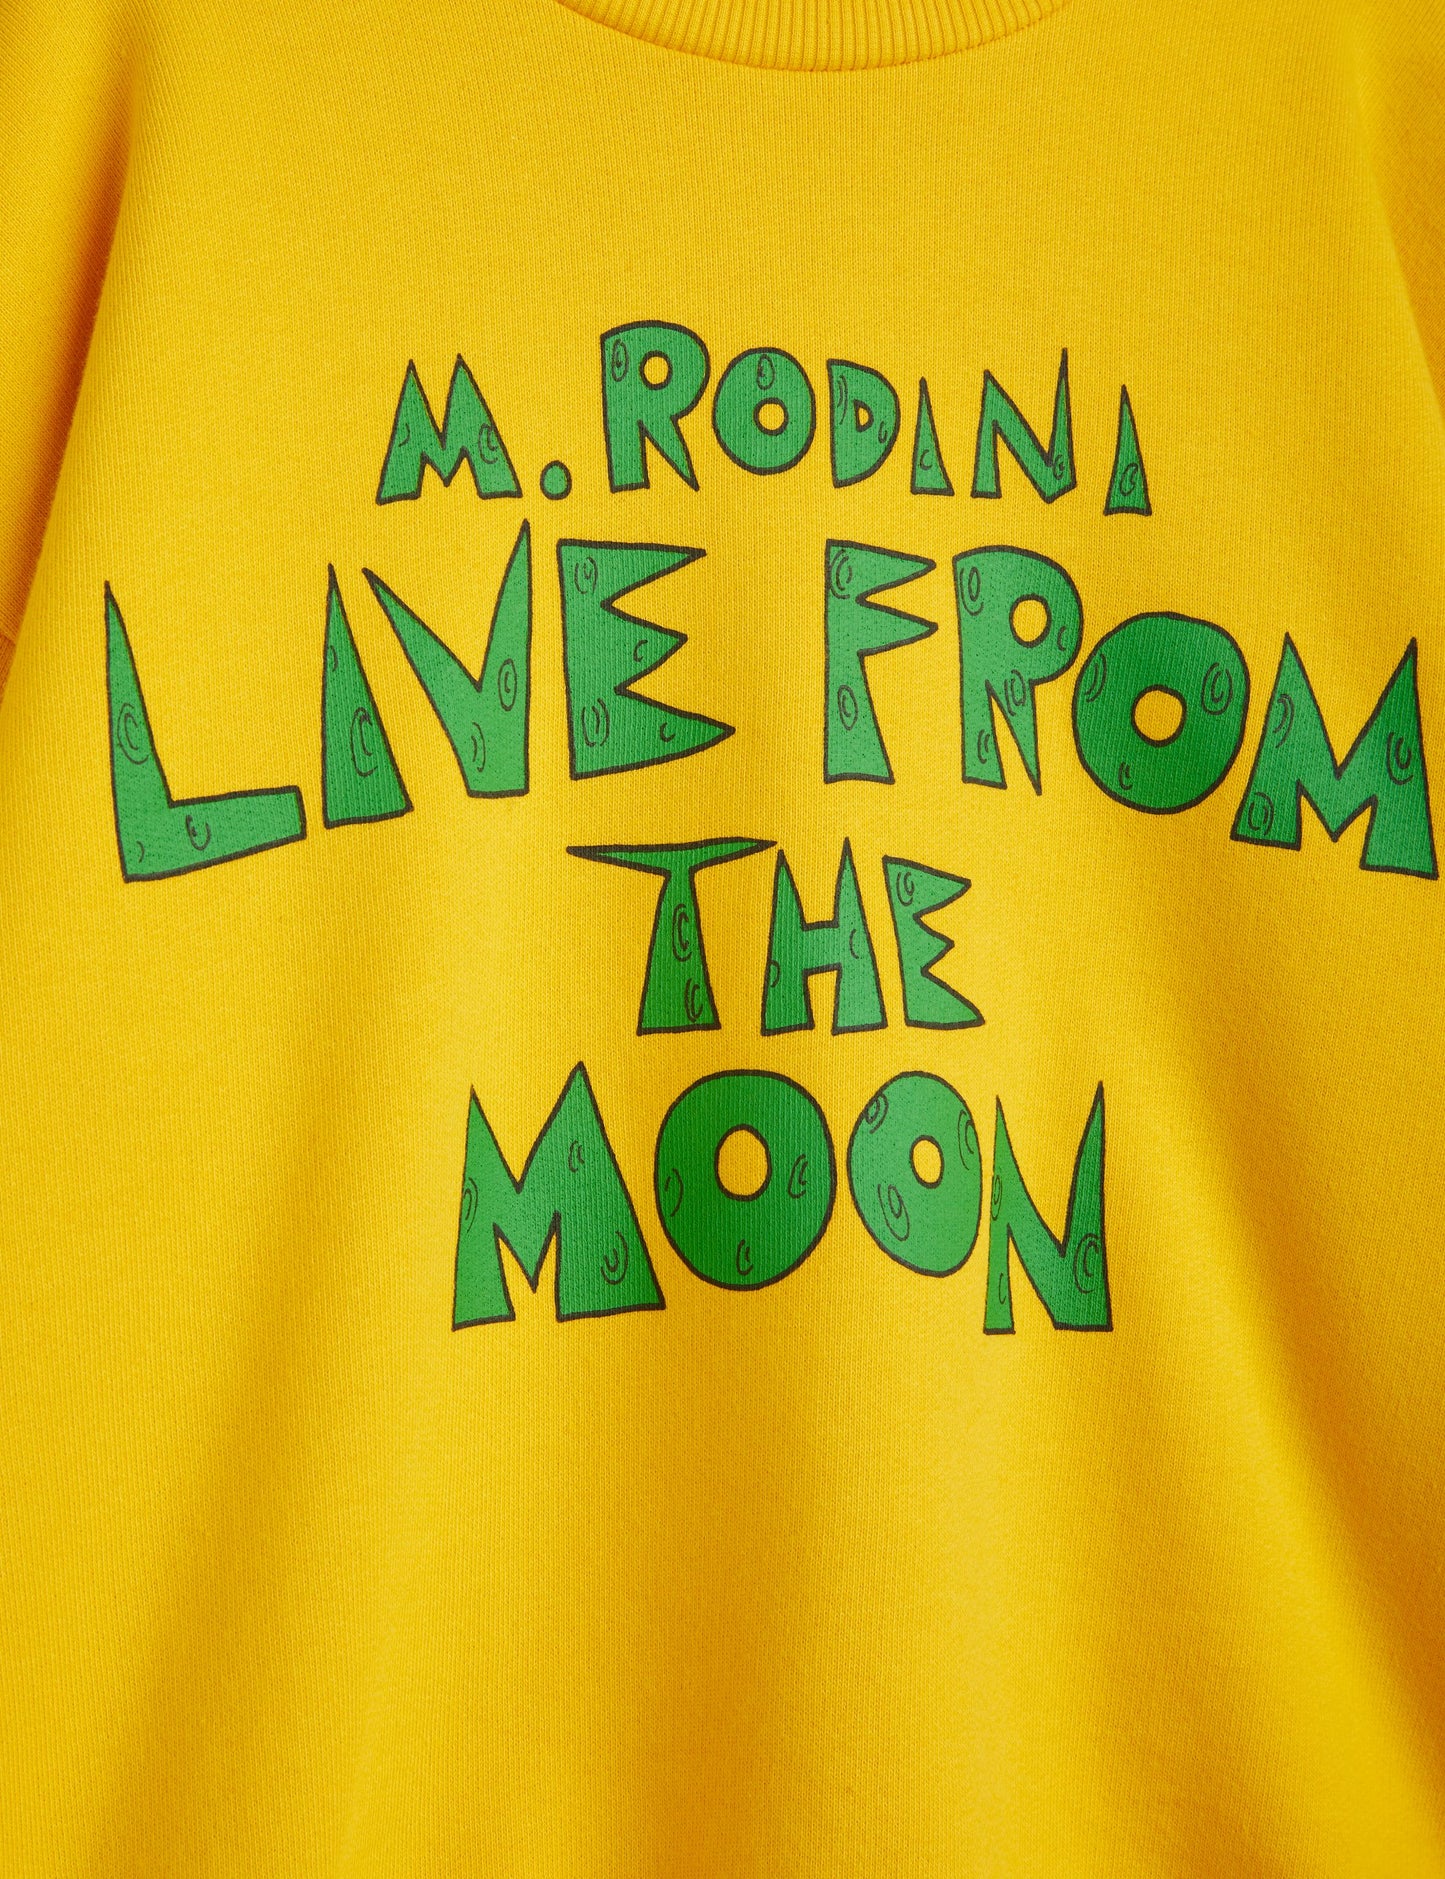 Live from the moon sweatshirt